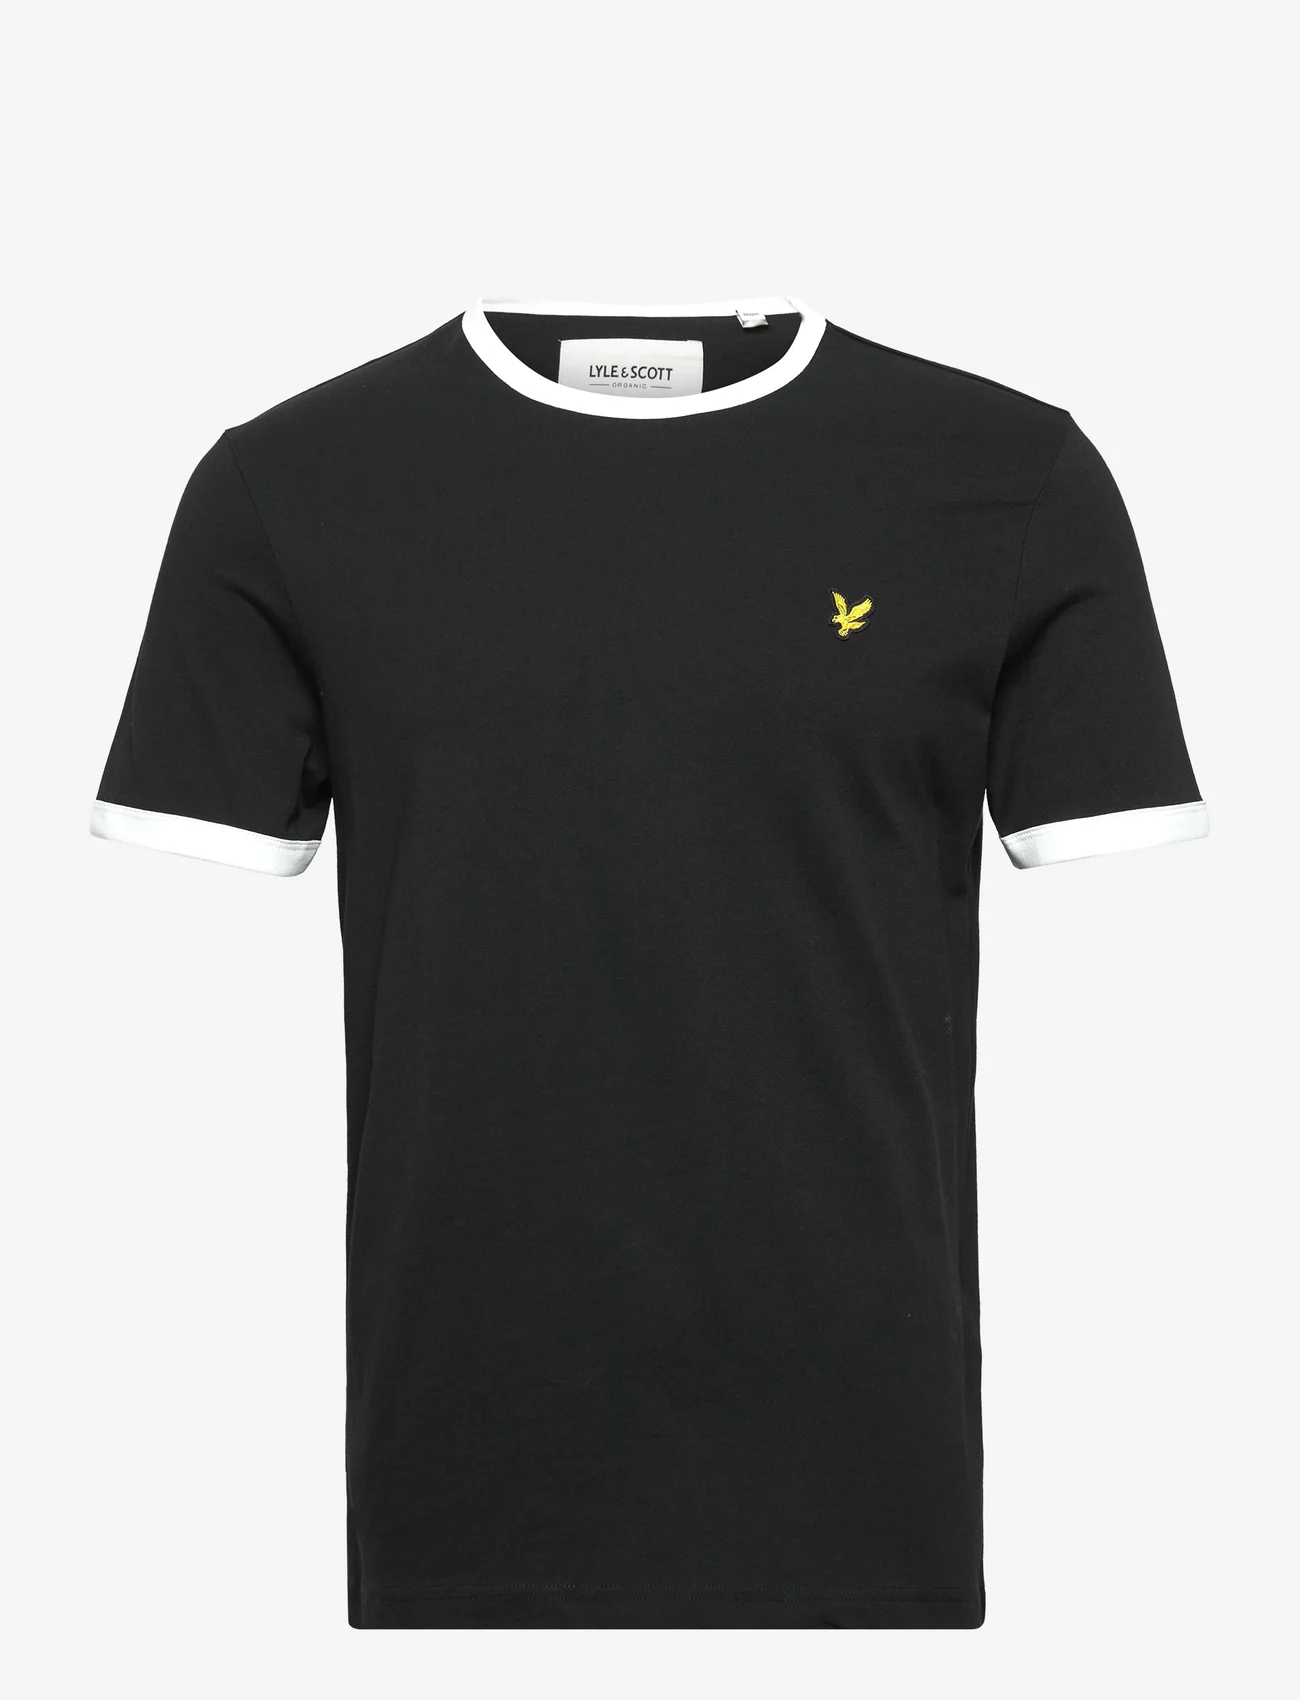 Lyle & Scott - Ringer T-Shirt - laagste prijzen - jet black/ white - 0